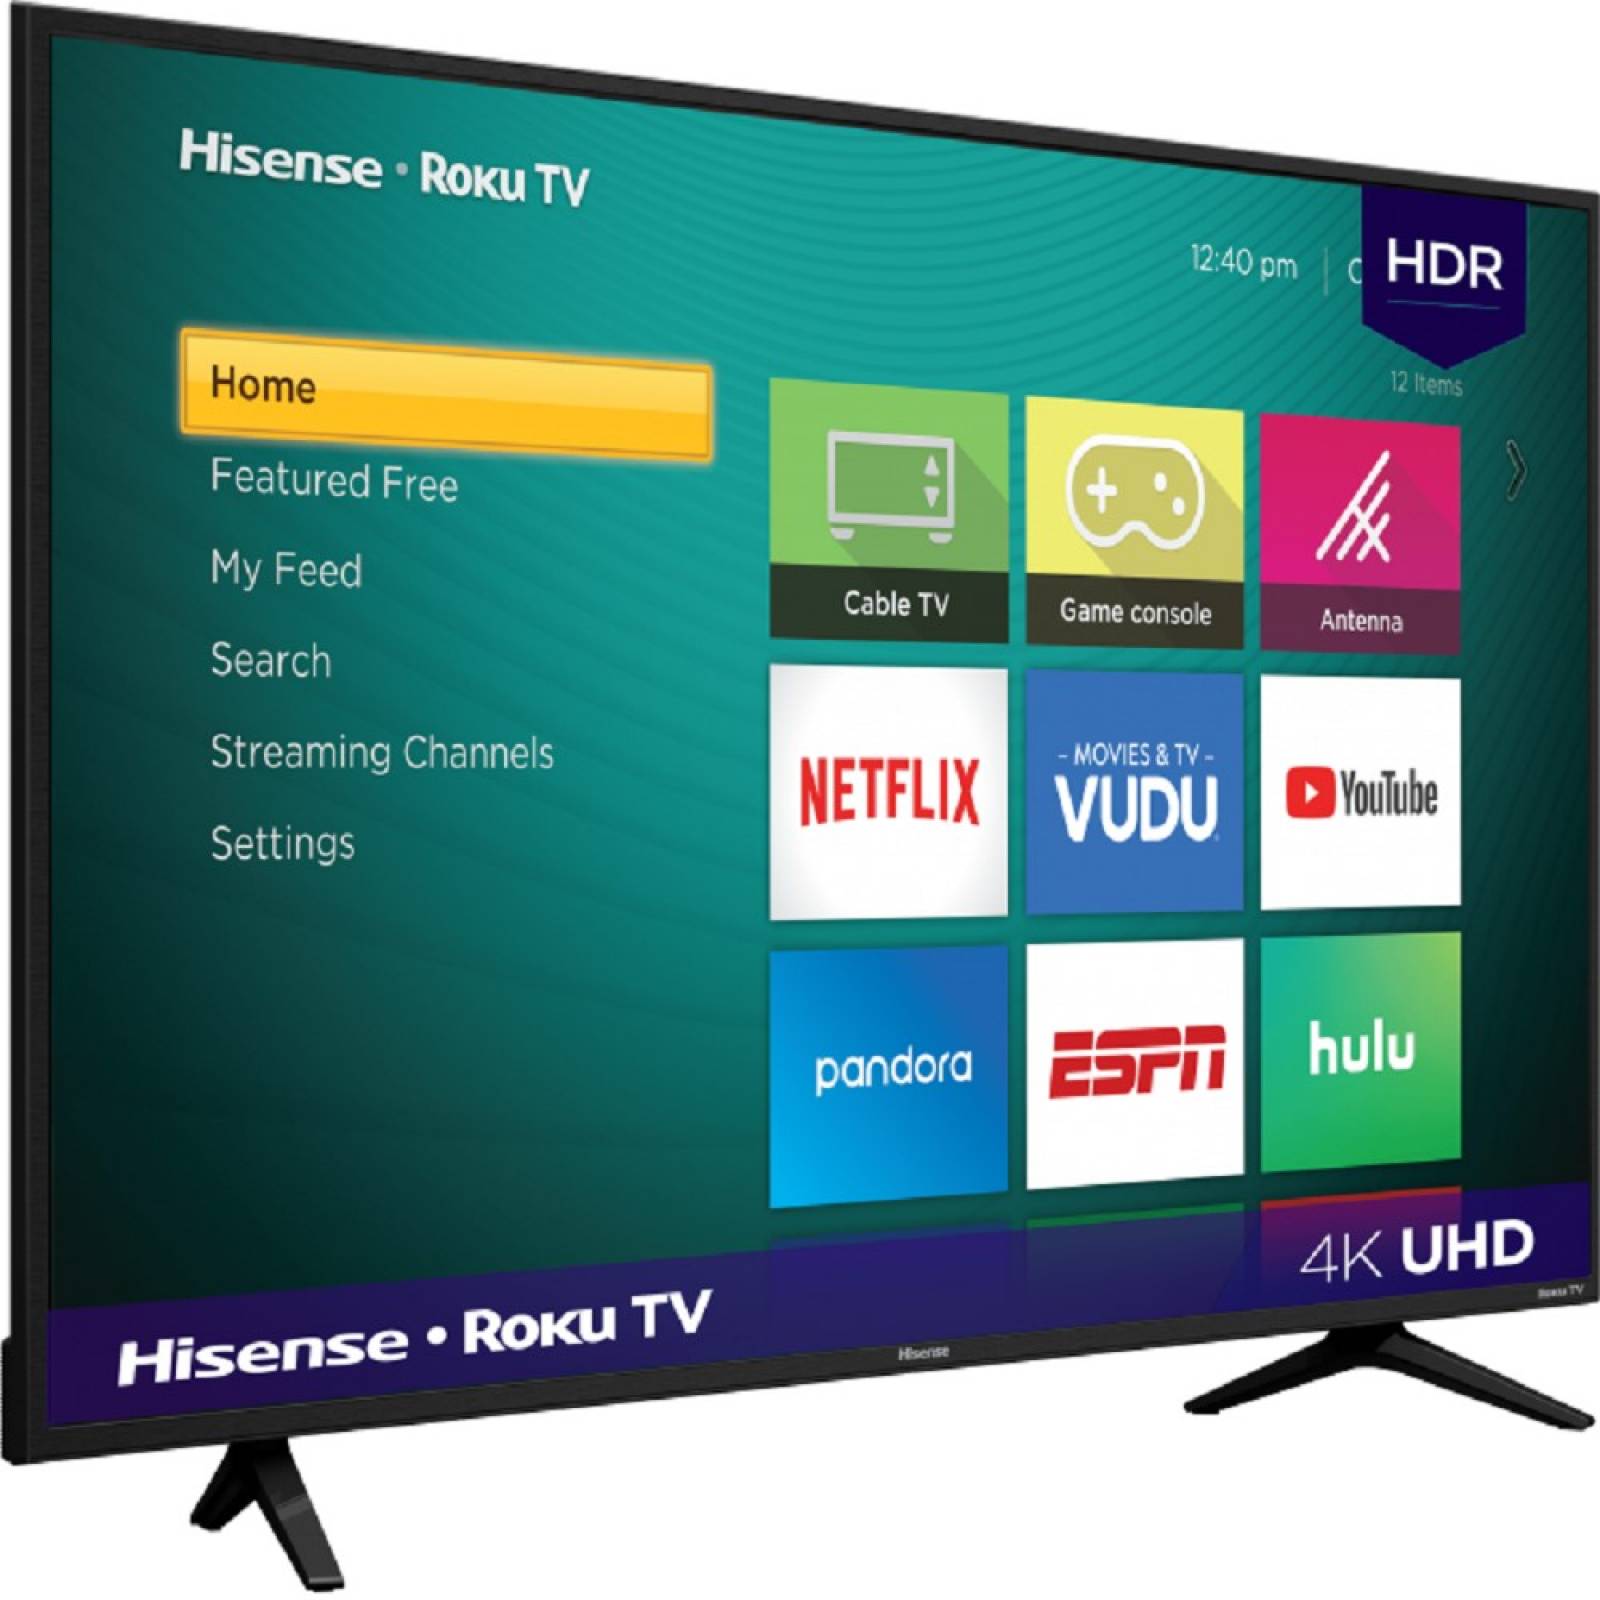 Smart TV 58 Hisense LED Roku TV HDMI 4K upscaler 58R6E - Reacondicionado